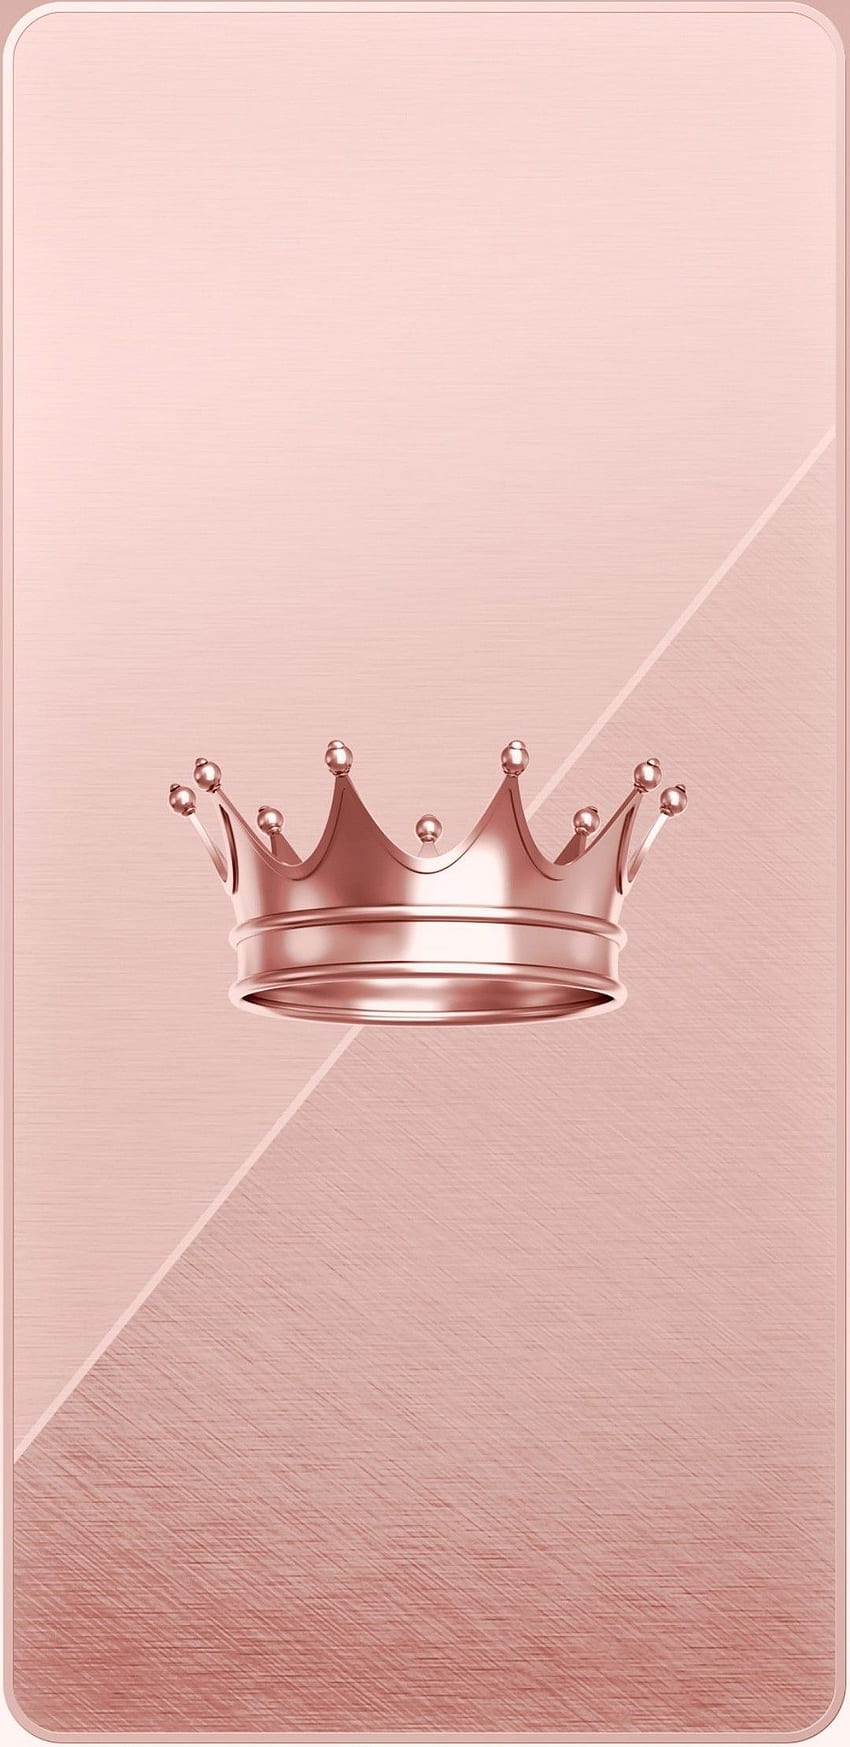 iPhone Mahkota, Mahkota Ratu wallpaper ponsel HD